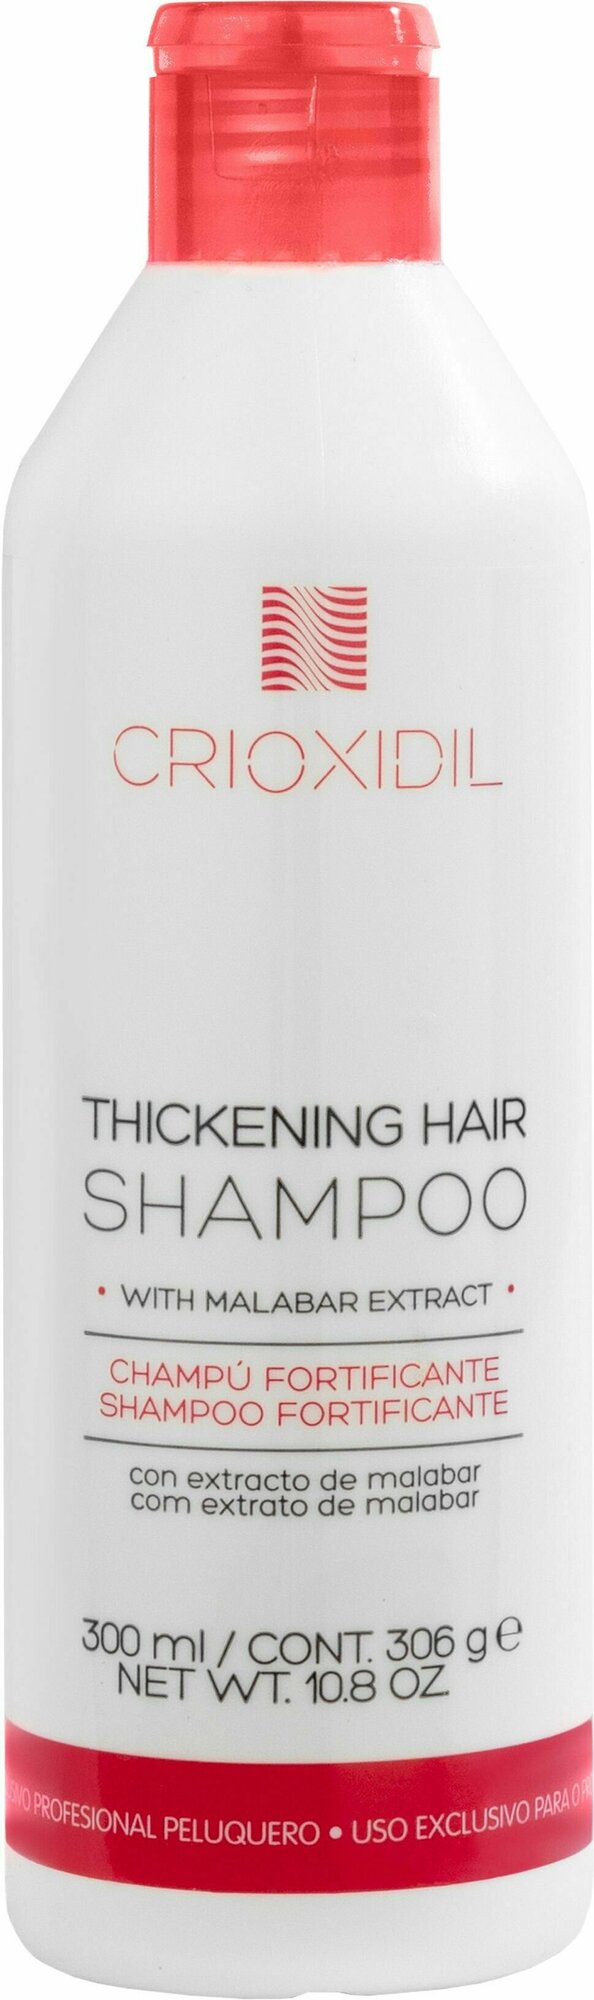 Шампунь против выпадения волос Crioxidil Falling hair shampoo, 300 мл